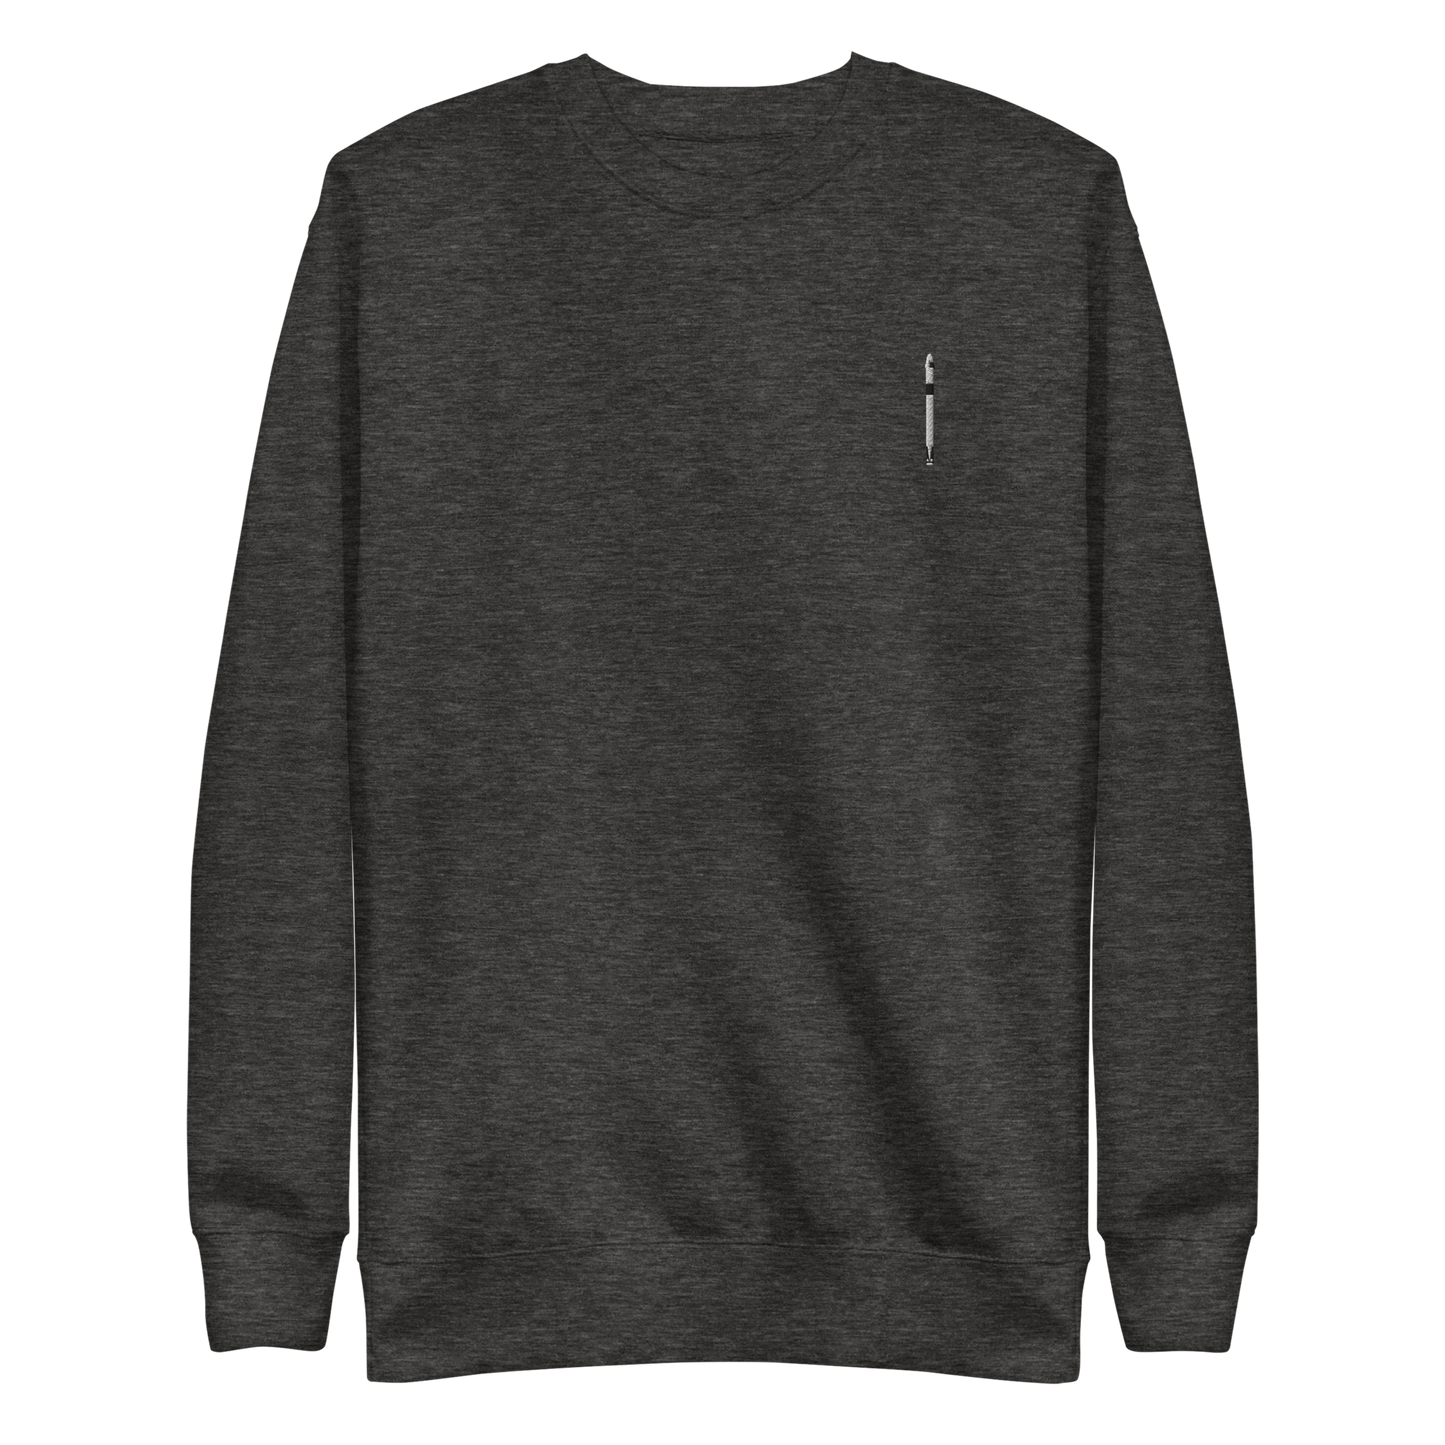 Falcon 9 Embroidered Sweatshirt